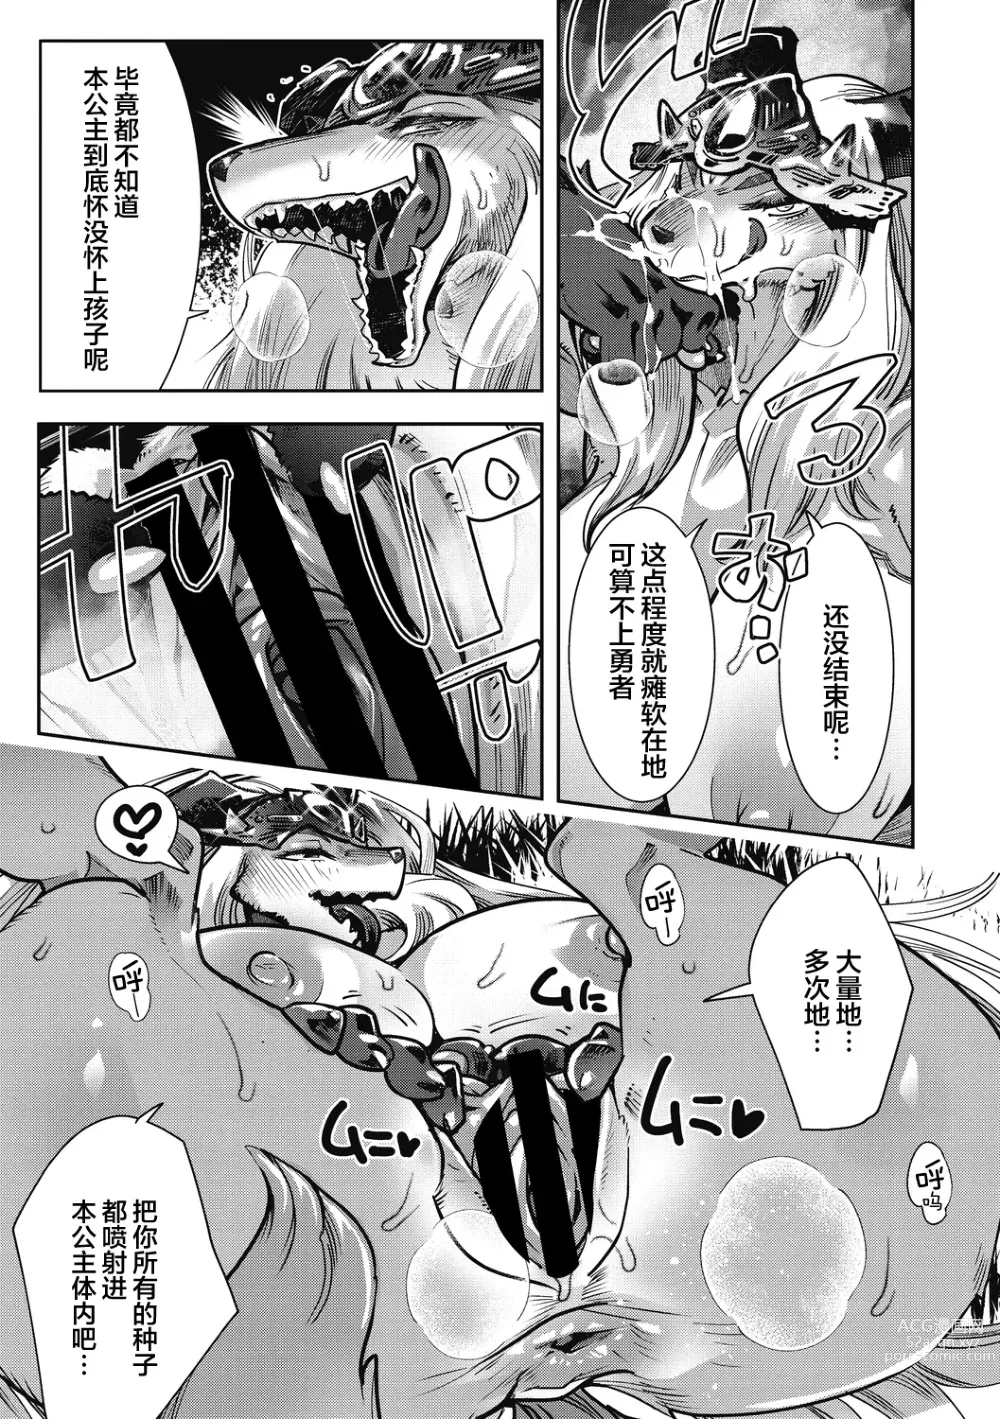 Page 20 of manga Yuusha ha Maou to Koi shitai Saishuuwa